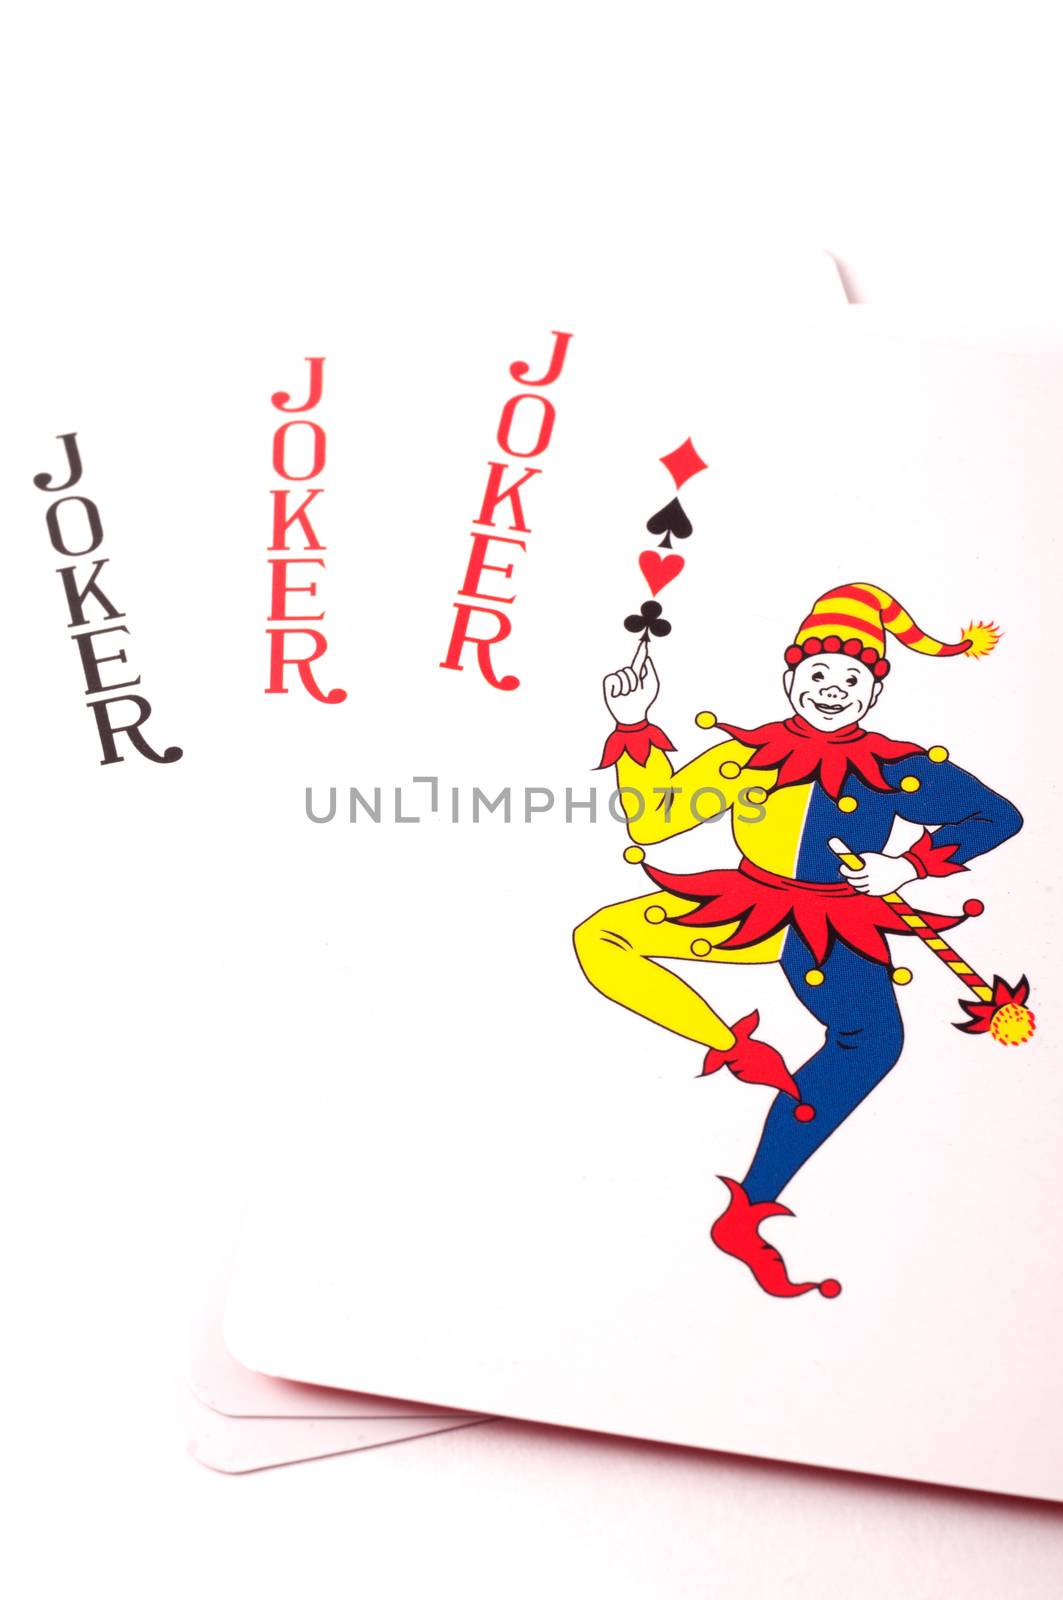 Three joker cards  by daoleduc